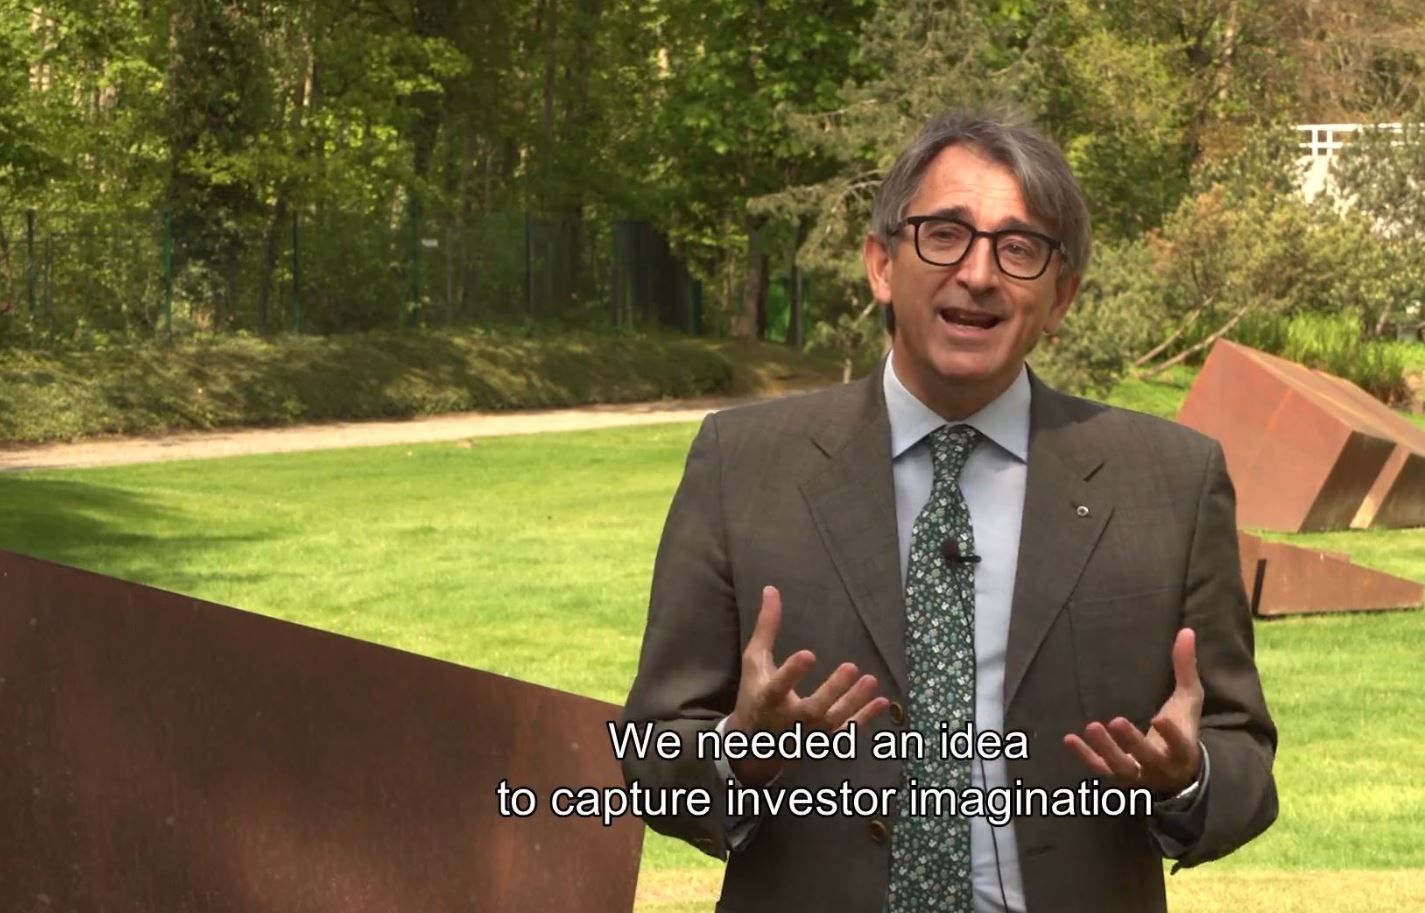 The EU bank’s Aldo Romani says the success of green bonds was a long shot 10 years ago.